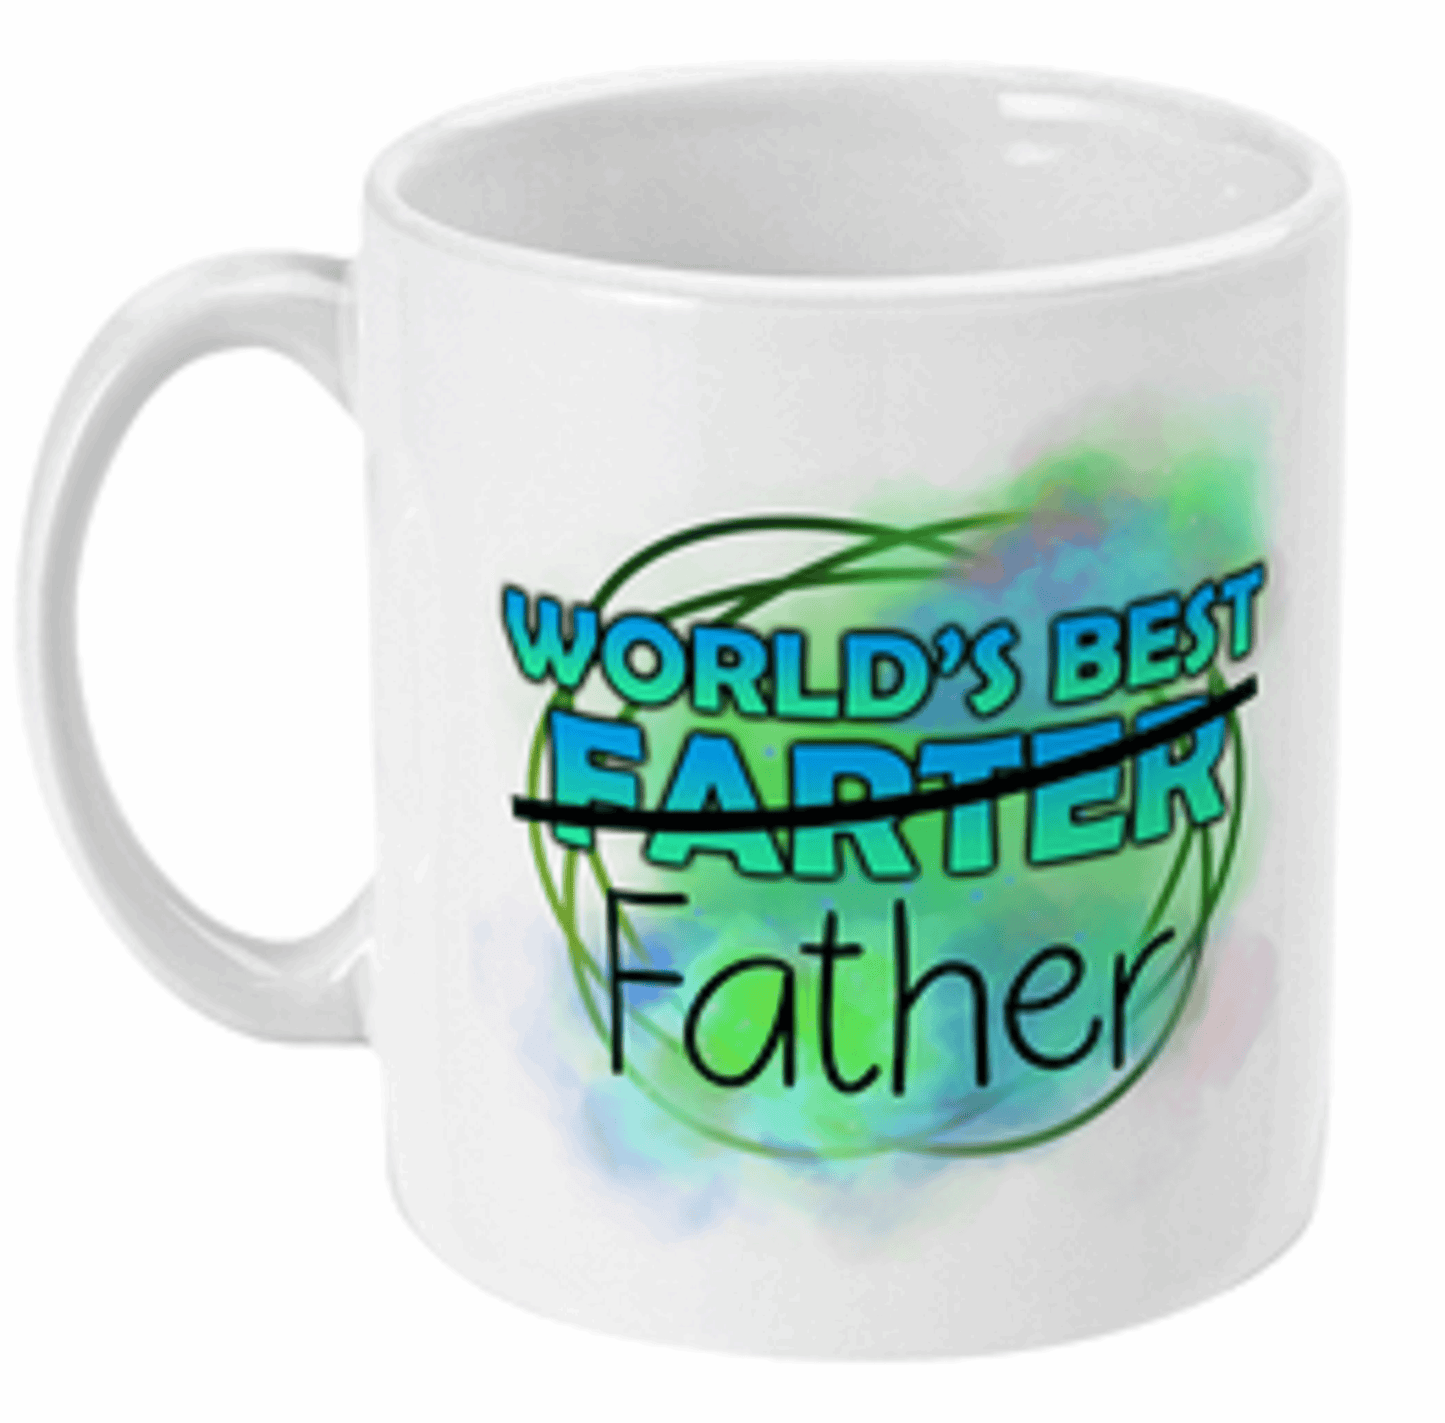  Worlds Best Farter aka Father Coffee Mug by Free Spirit Accessories sold by Free Spirit Accessories